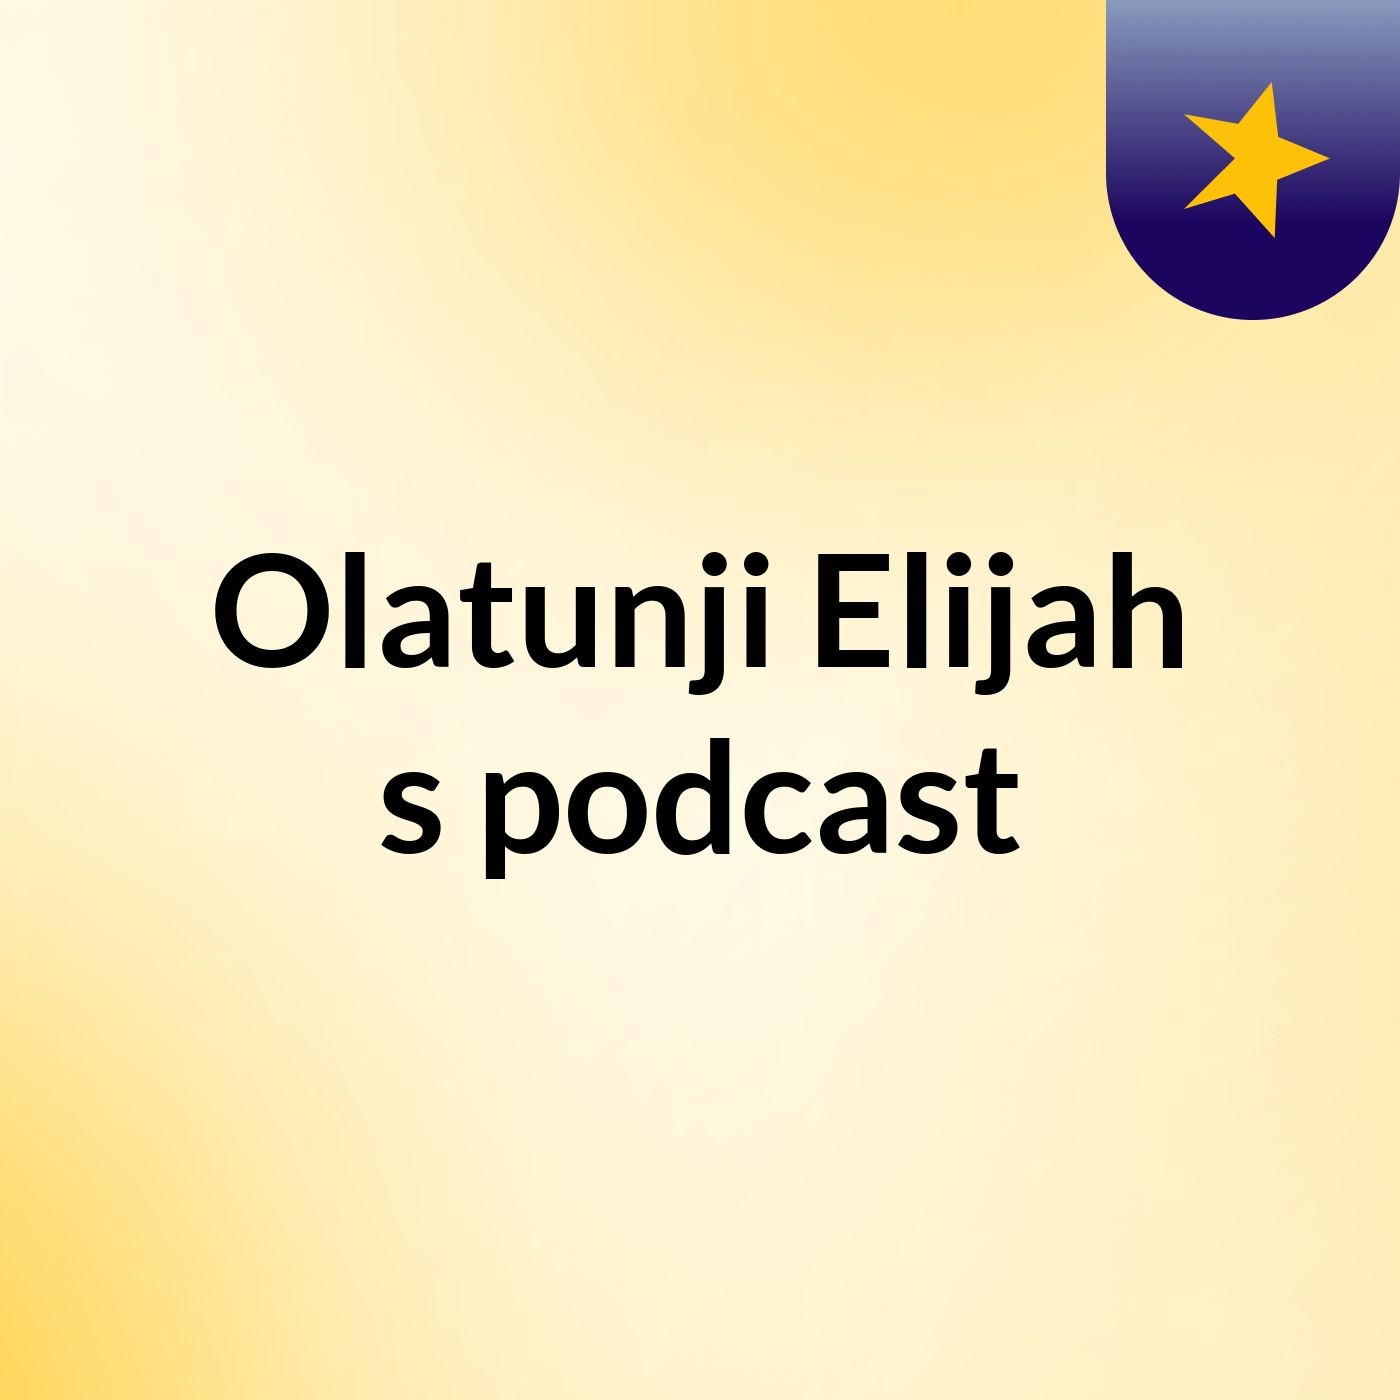 Olatunji Elijah's podcast